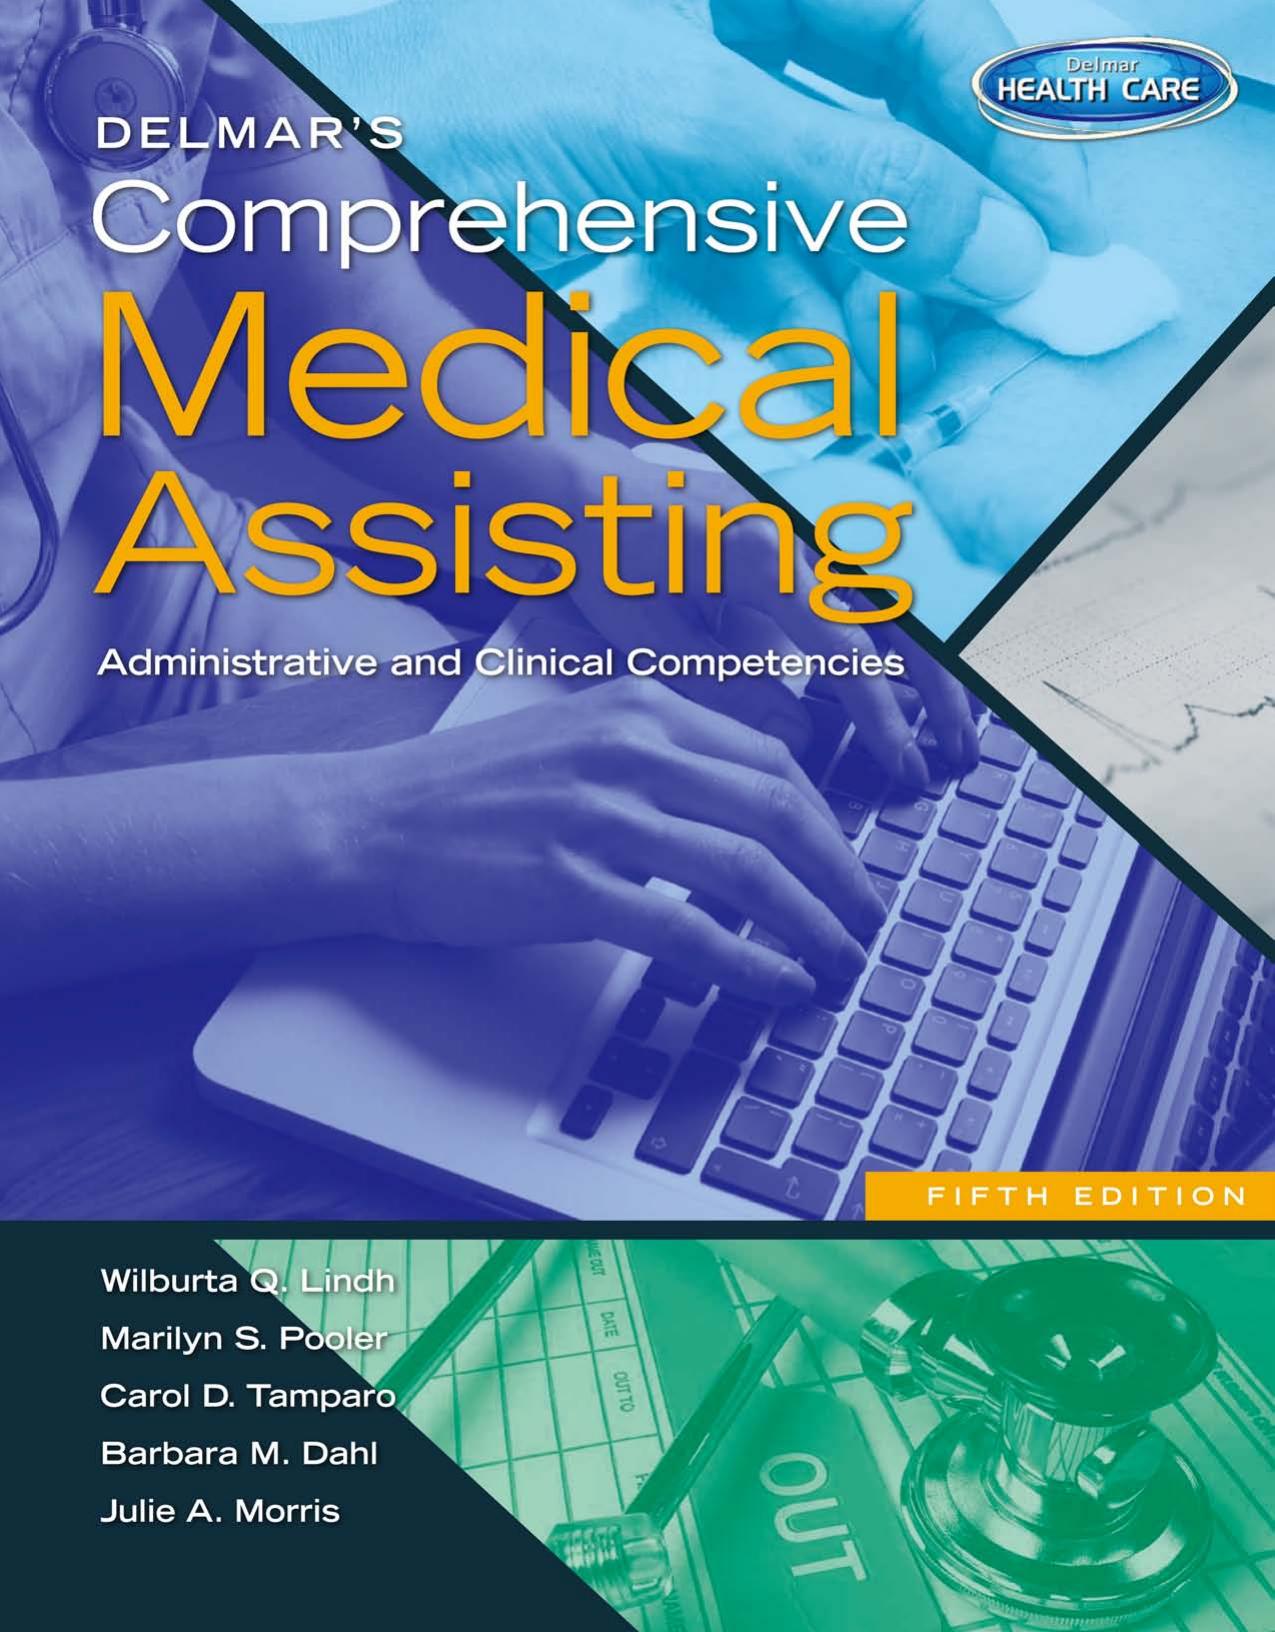 Delmar's Comprehensive Medical Assisting 5th Editon by Wilburta Q. Lindh.jpg